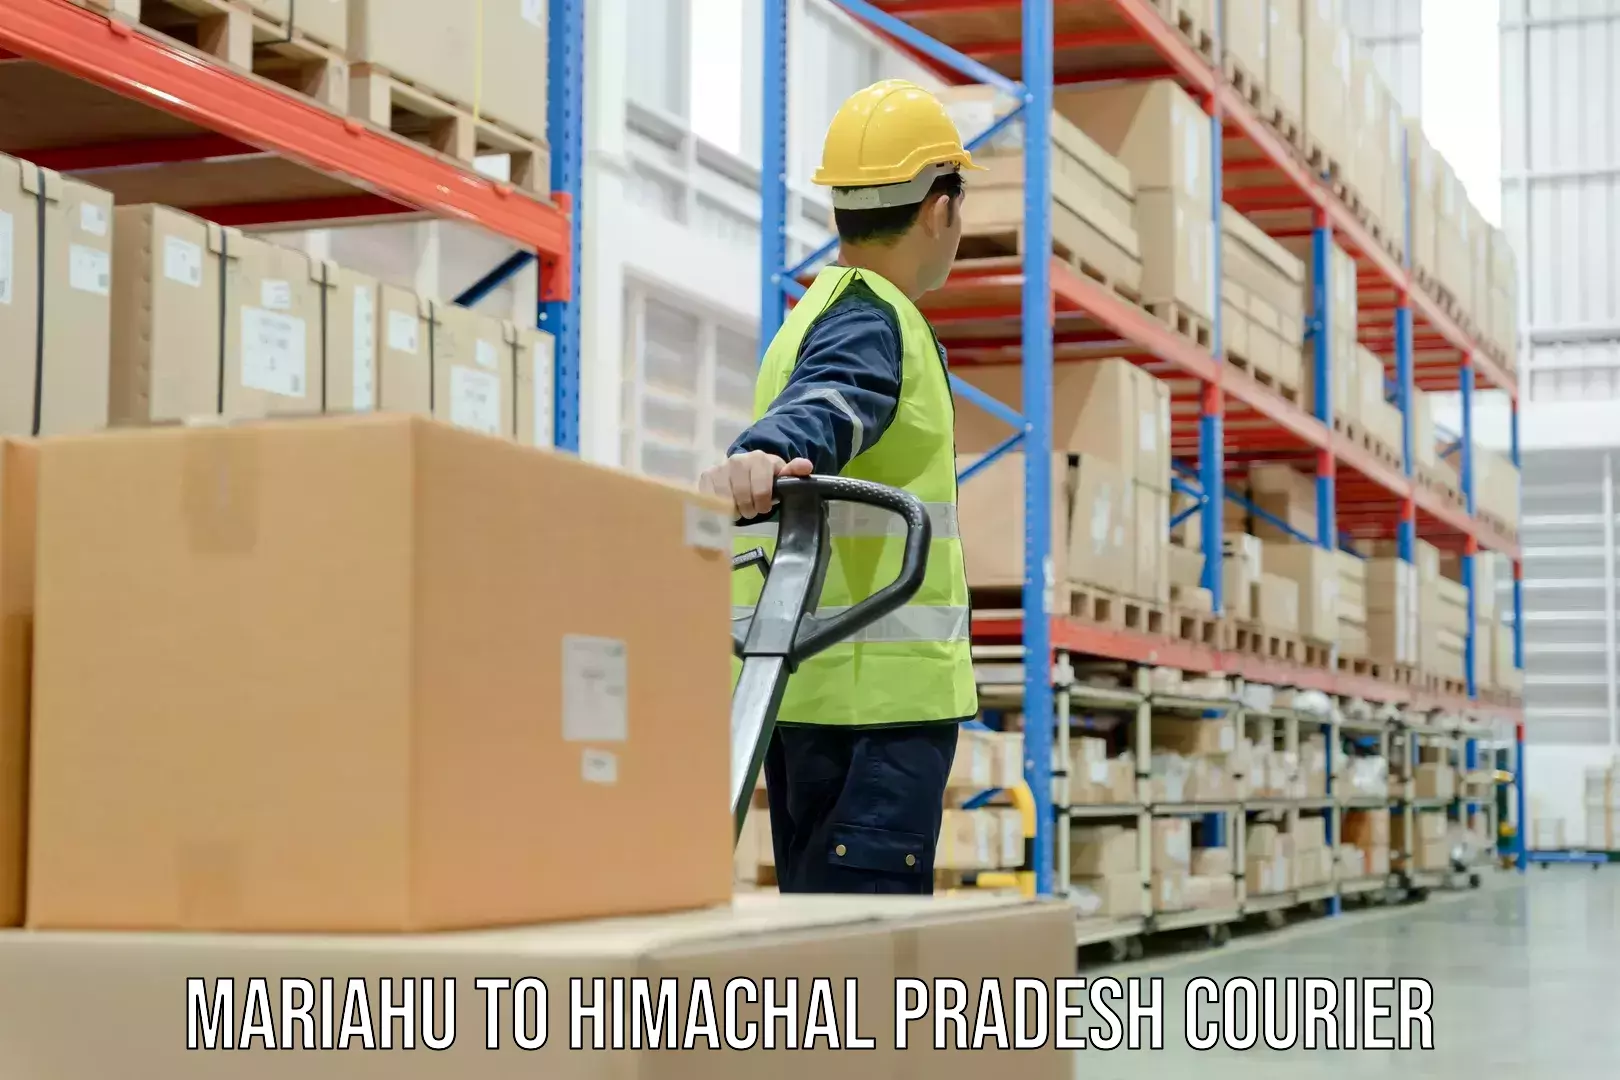 Advanced courier platforms Mariahu to Himachal Pradesh